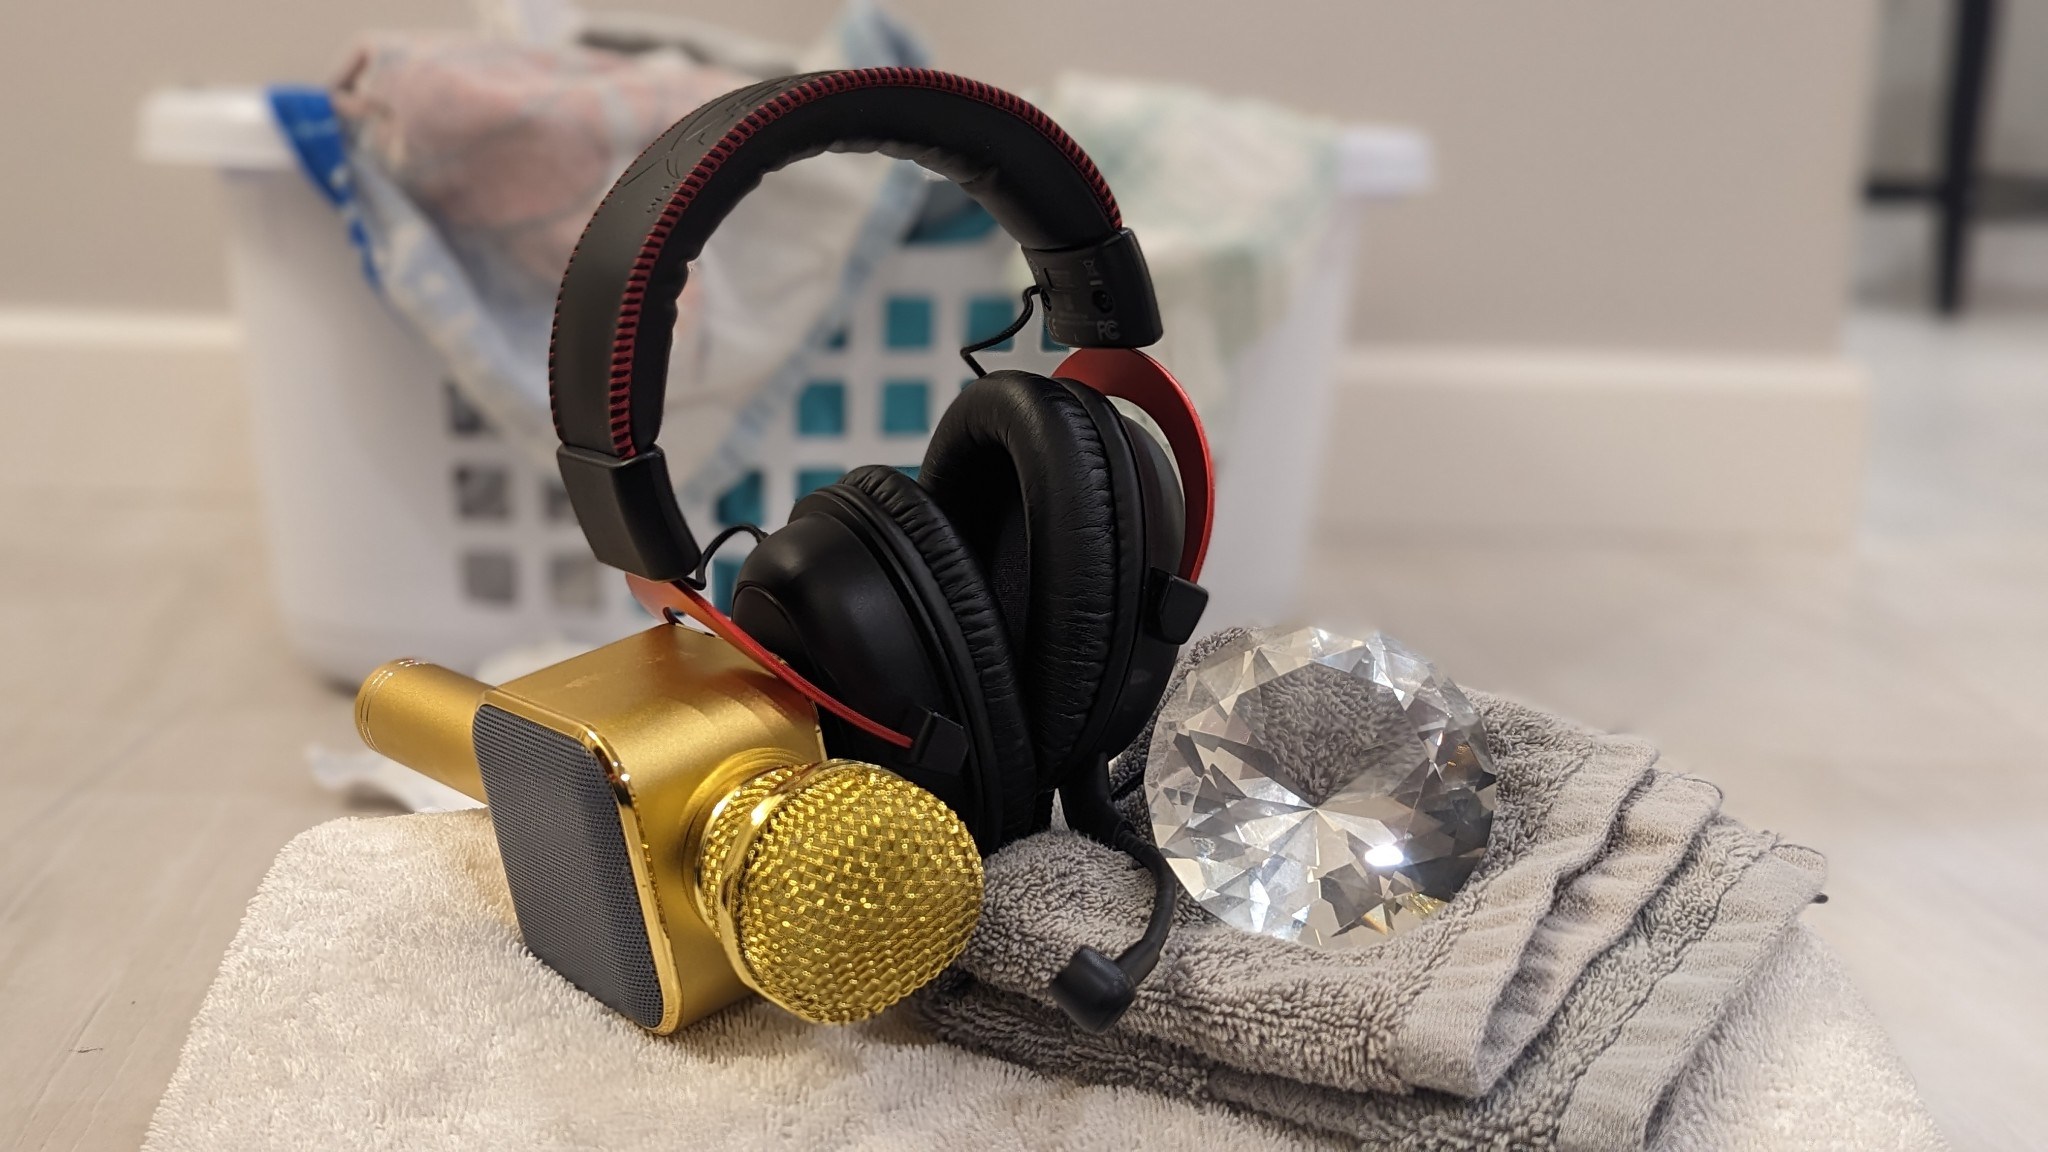 DiAmond, mic, headset in laundry